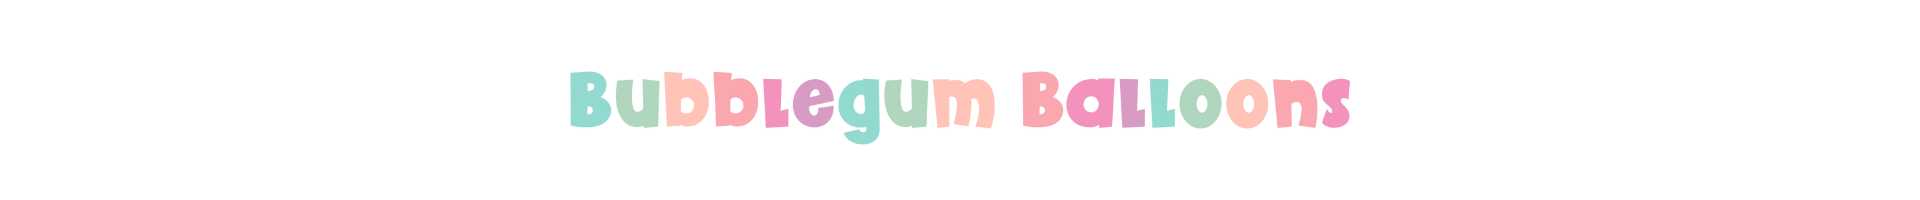 Bubblegum Balloons Blog